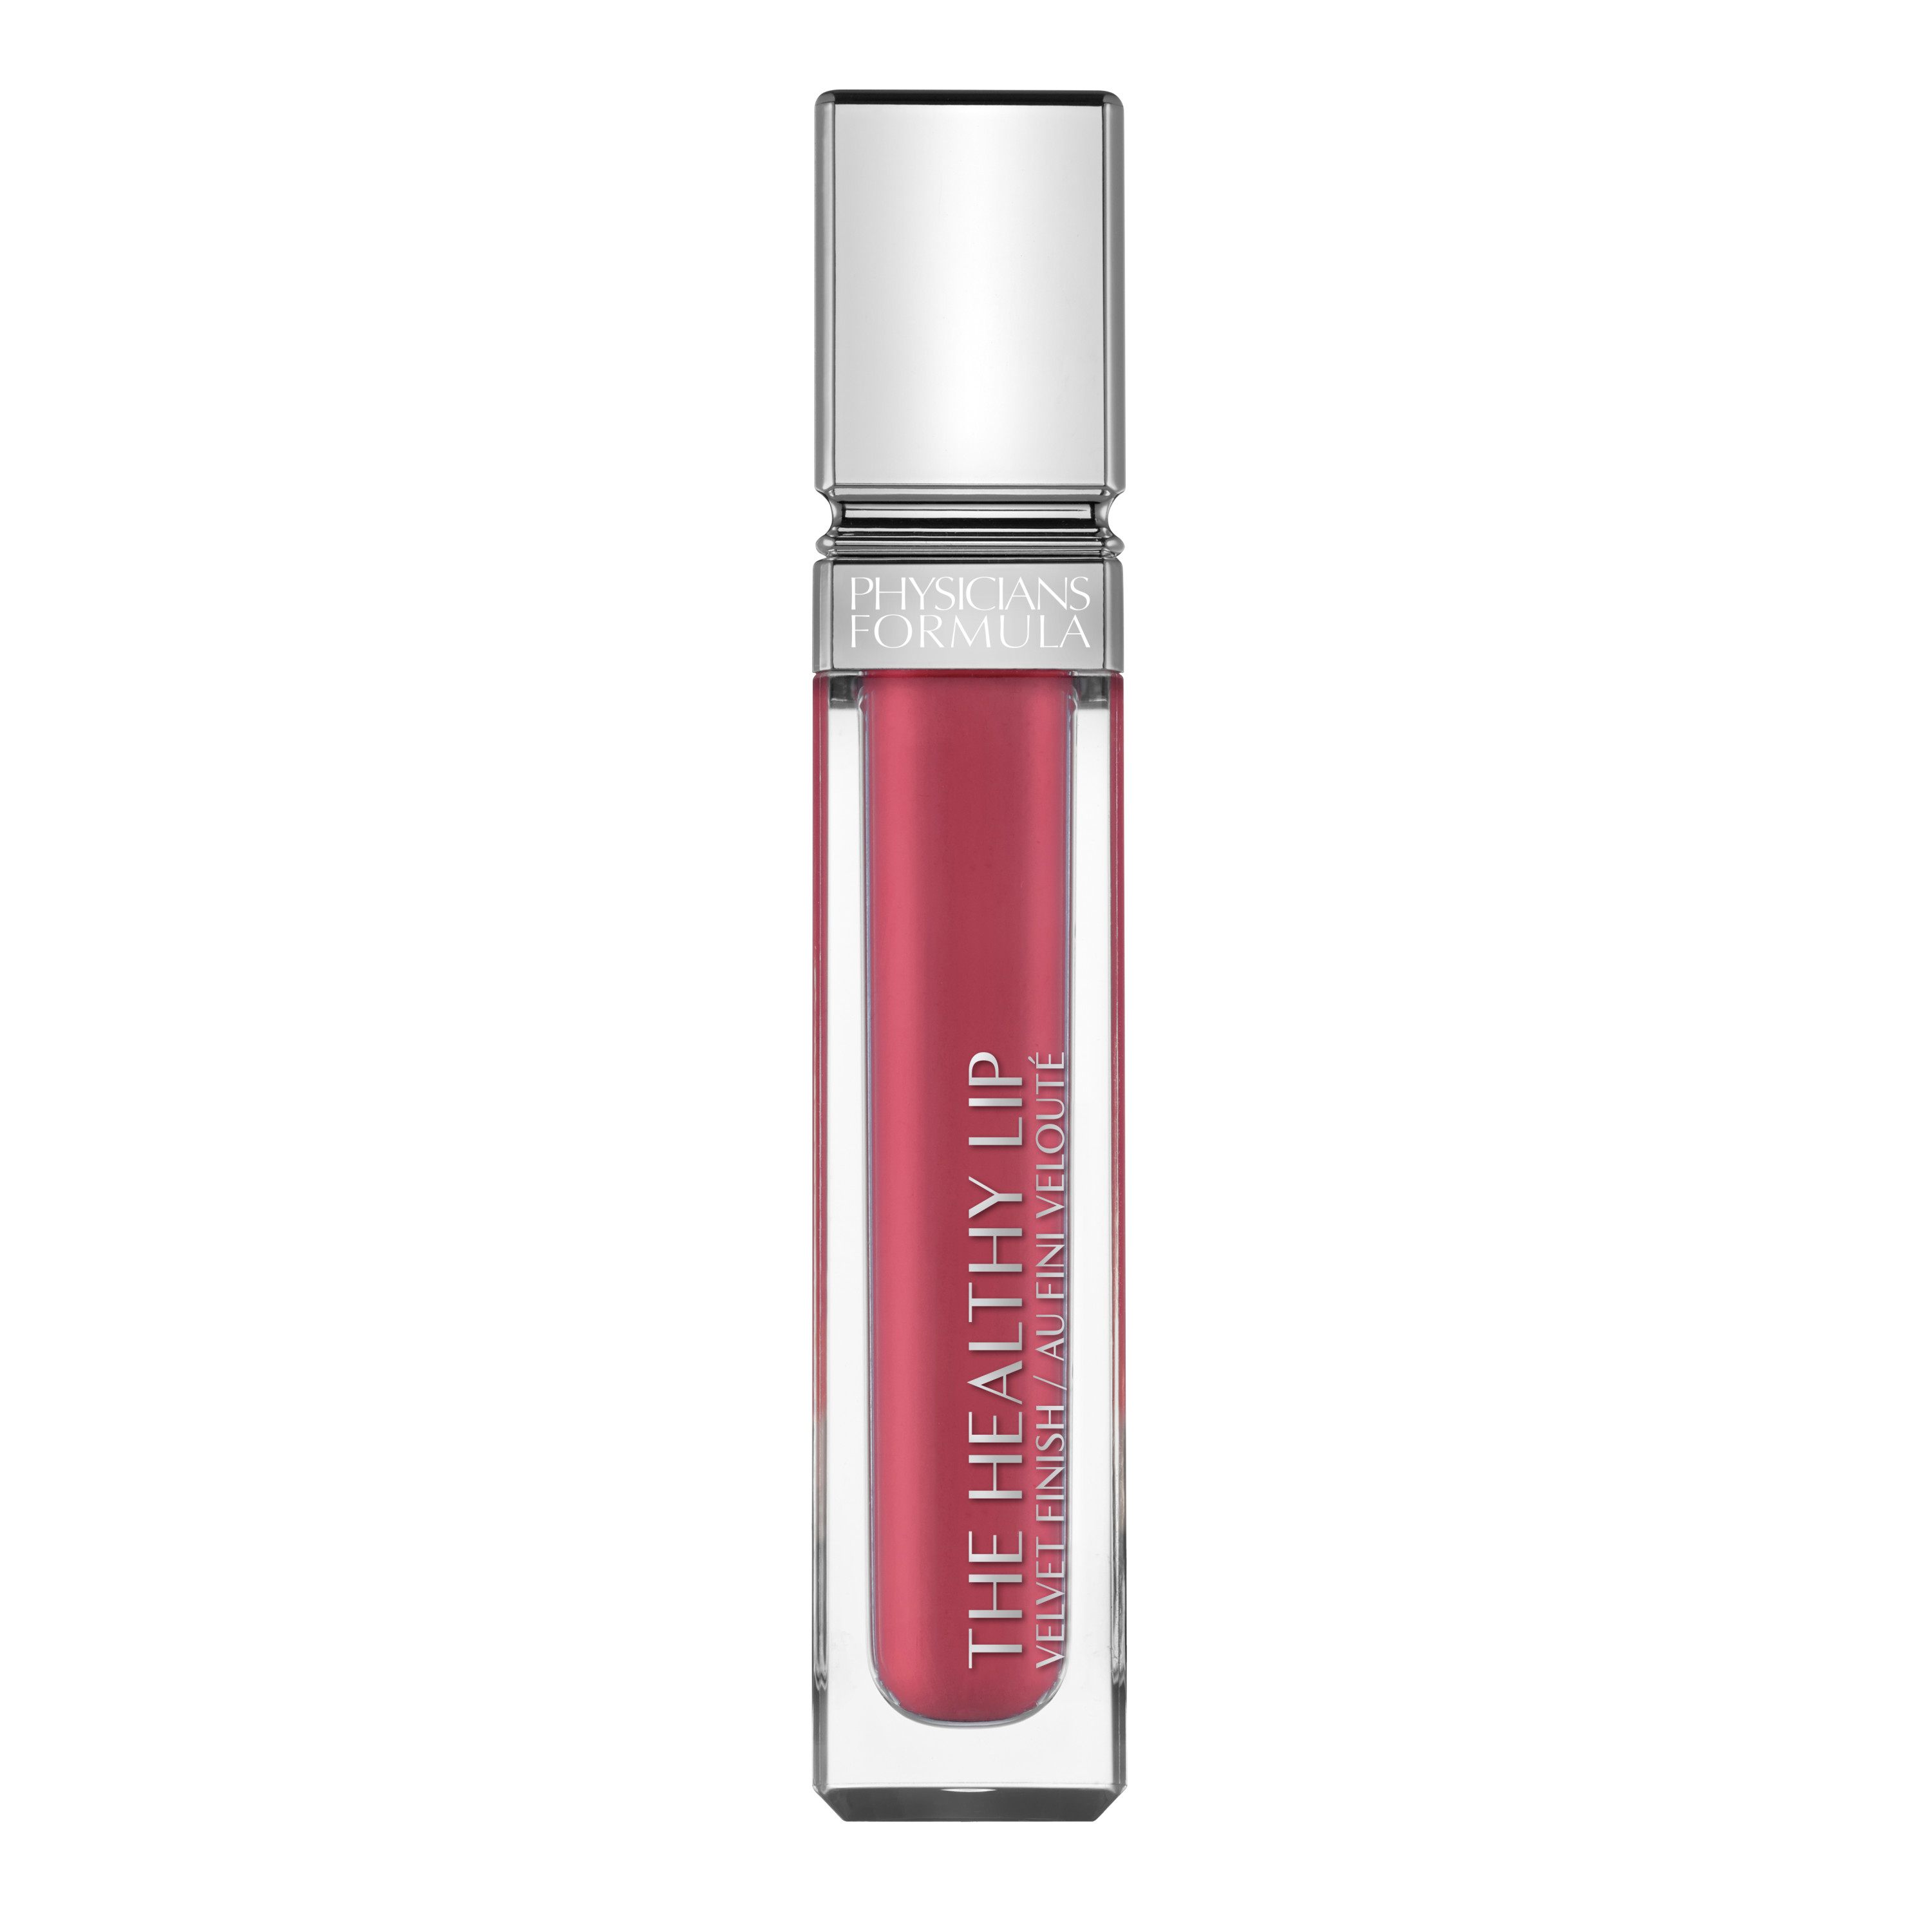 Physicians Formula The Healthy Lip Velvet Liquid Lipstick, Dose of Rose - image 2 of 3